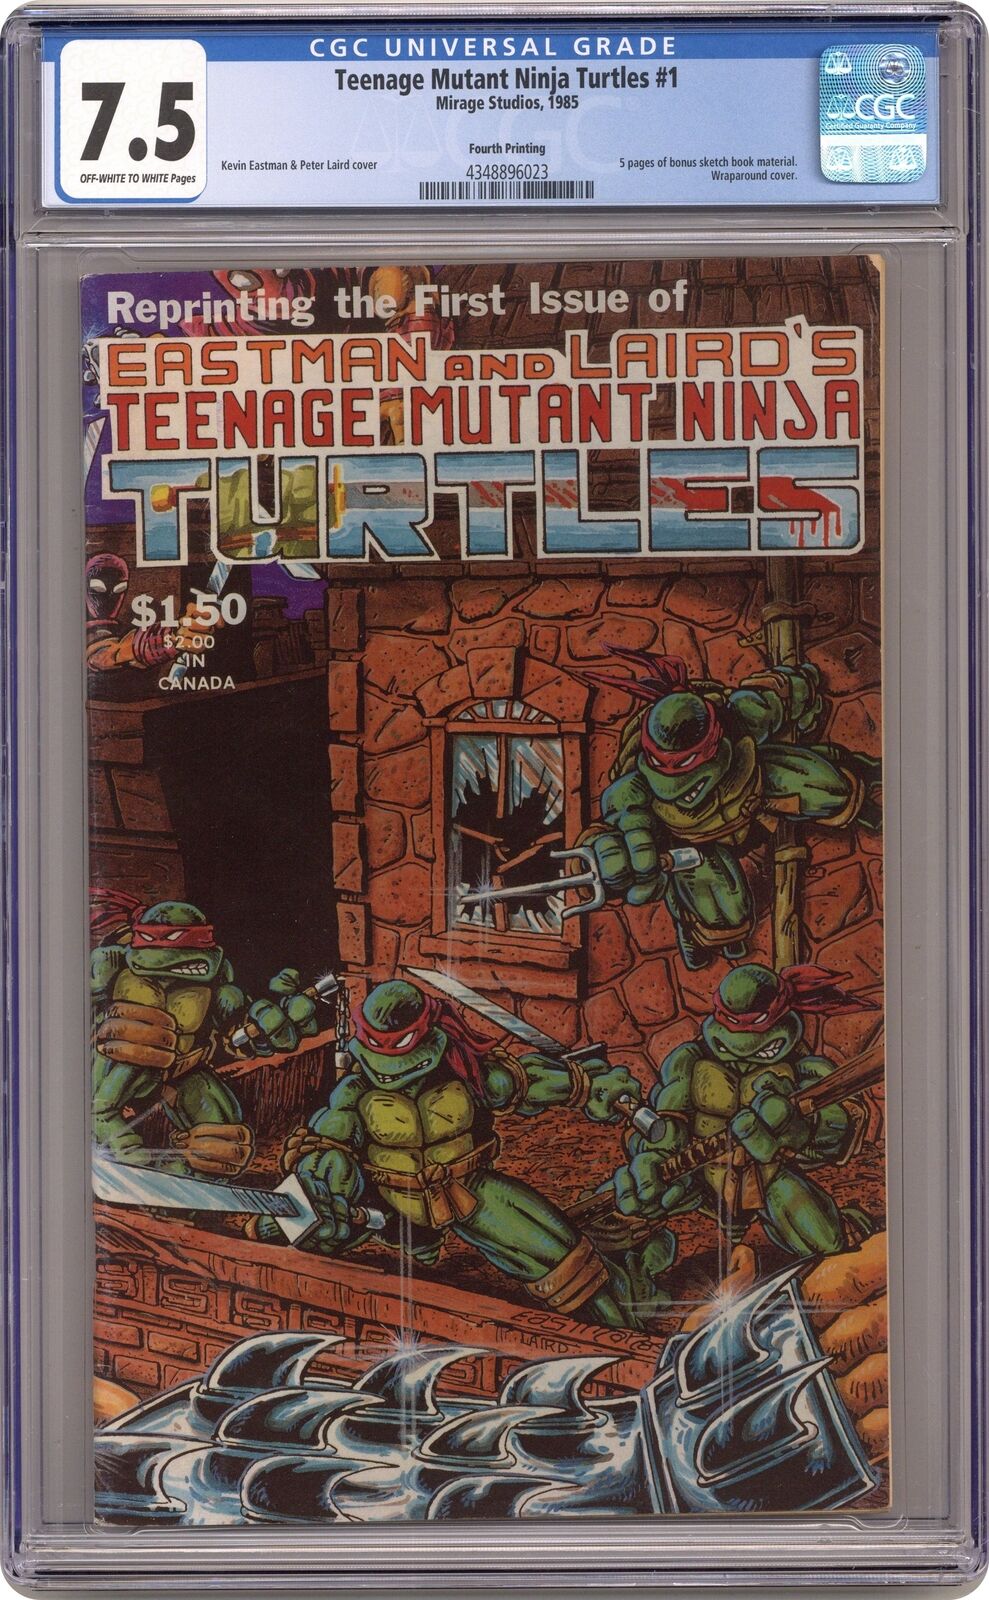 Teenage Mutant Ninja Turtles #1 New Wrp Full Color 4th Printing CGC 7.5 1985